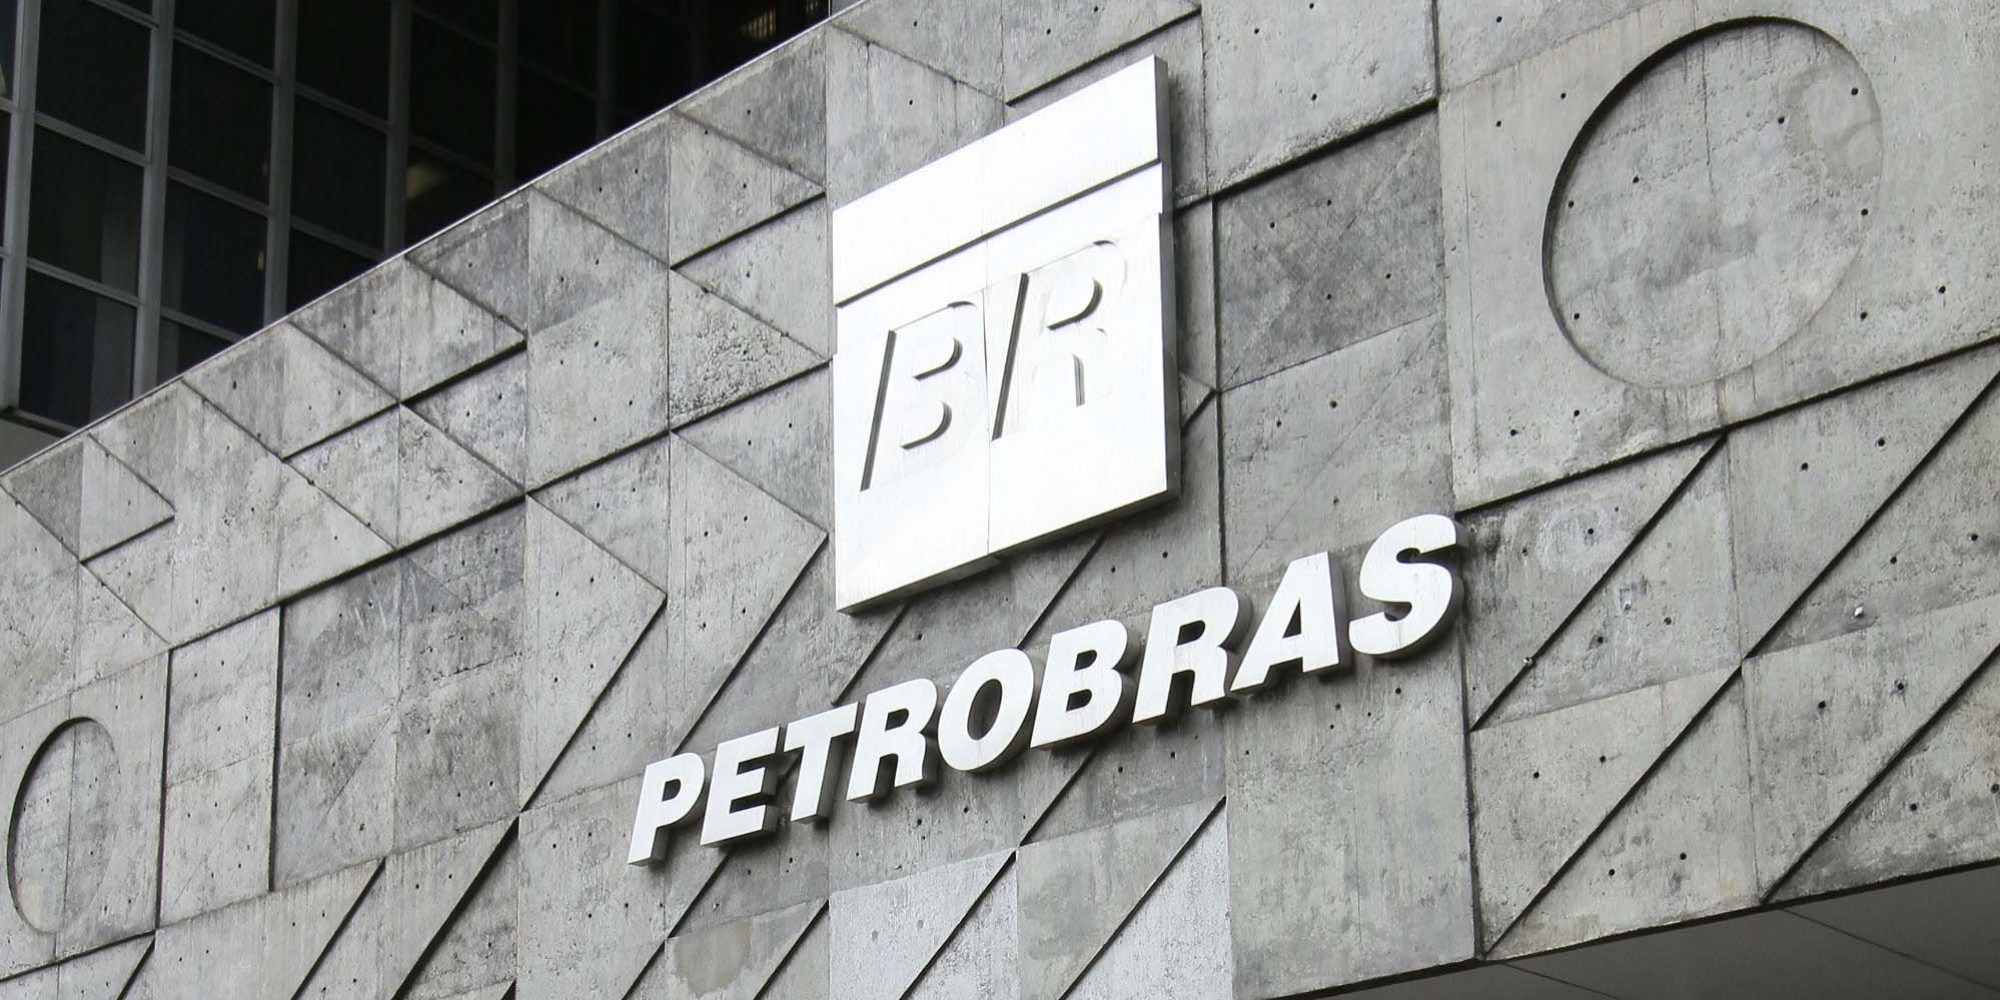 Brazil oil company